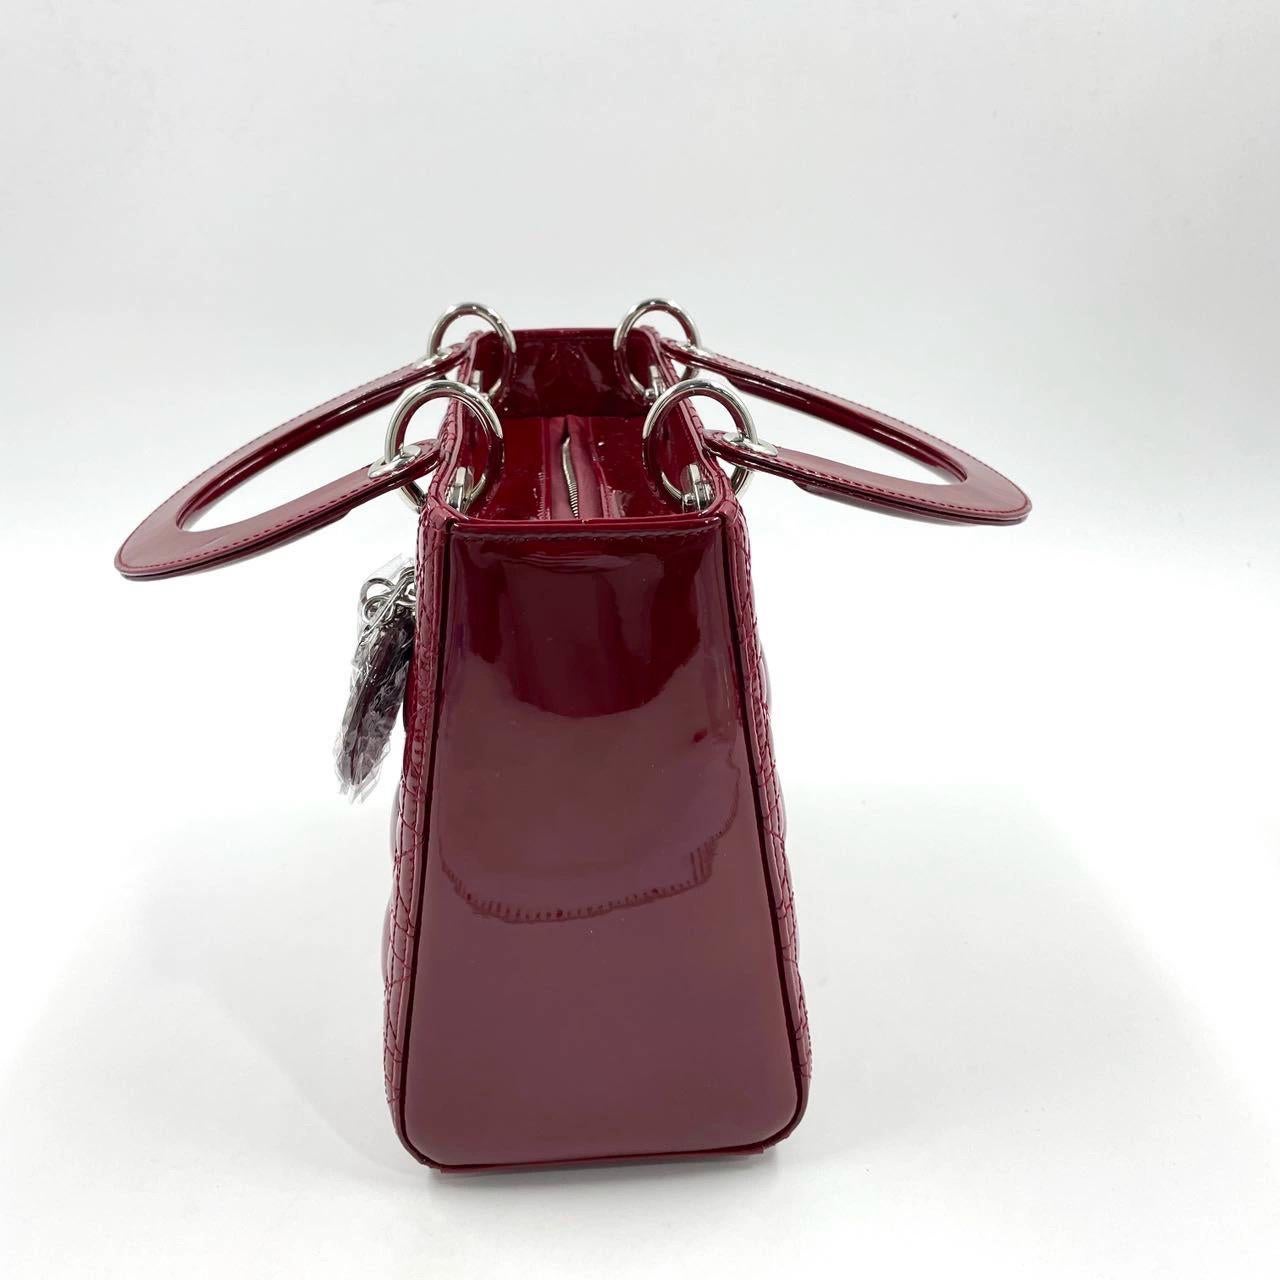 Lady Dior 2017 Medium Burgundy Patent Leather Handbag Adjustable Strap For Sale 2